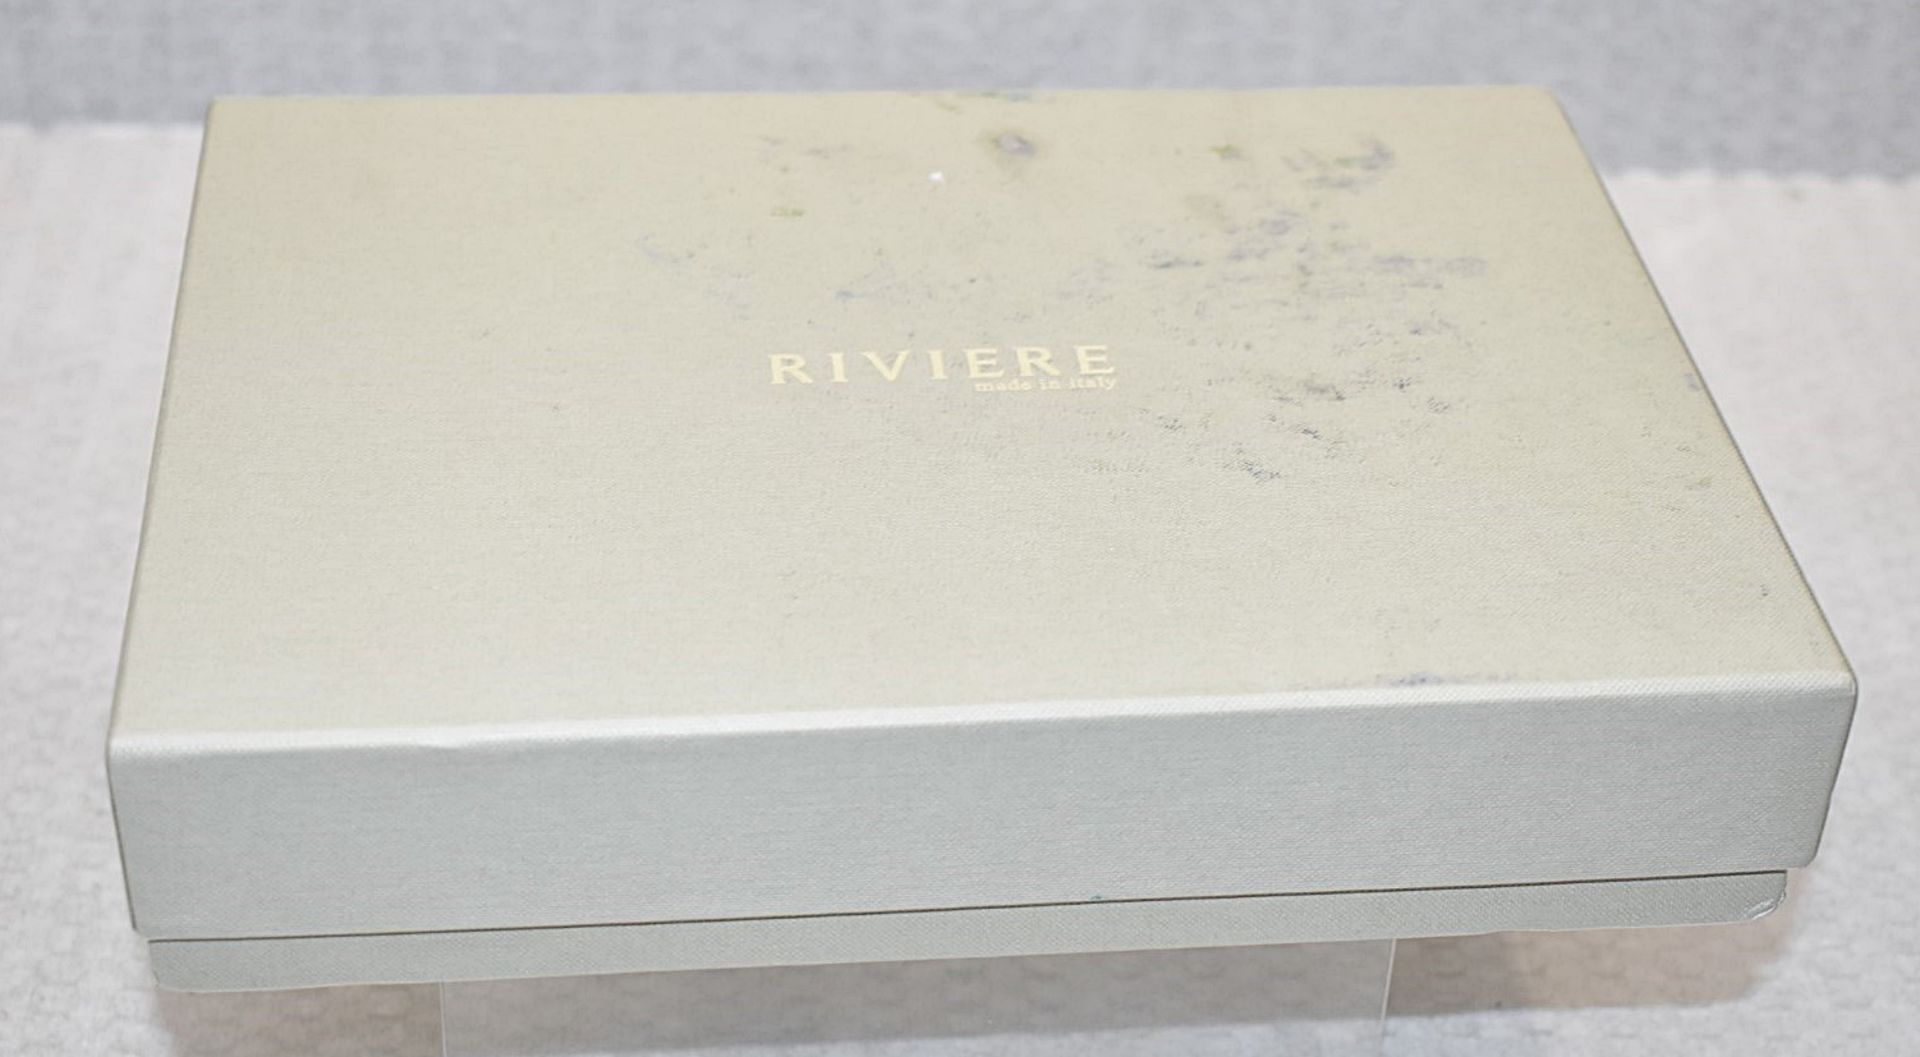 1 x RIVIERE Luxury Italian Leather Artisan Woven Tray (18cm x 24cm) - Original Price £349.00 - Image 2 of 10